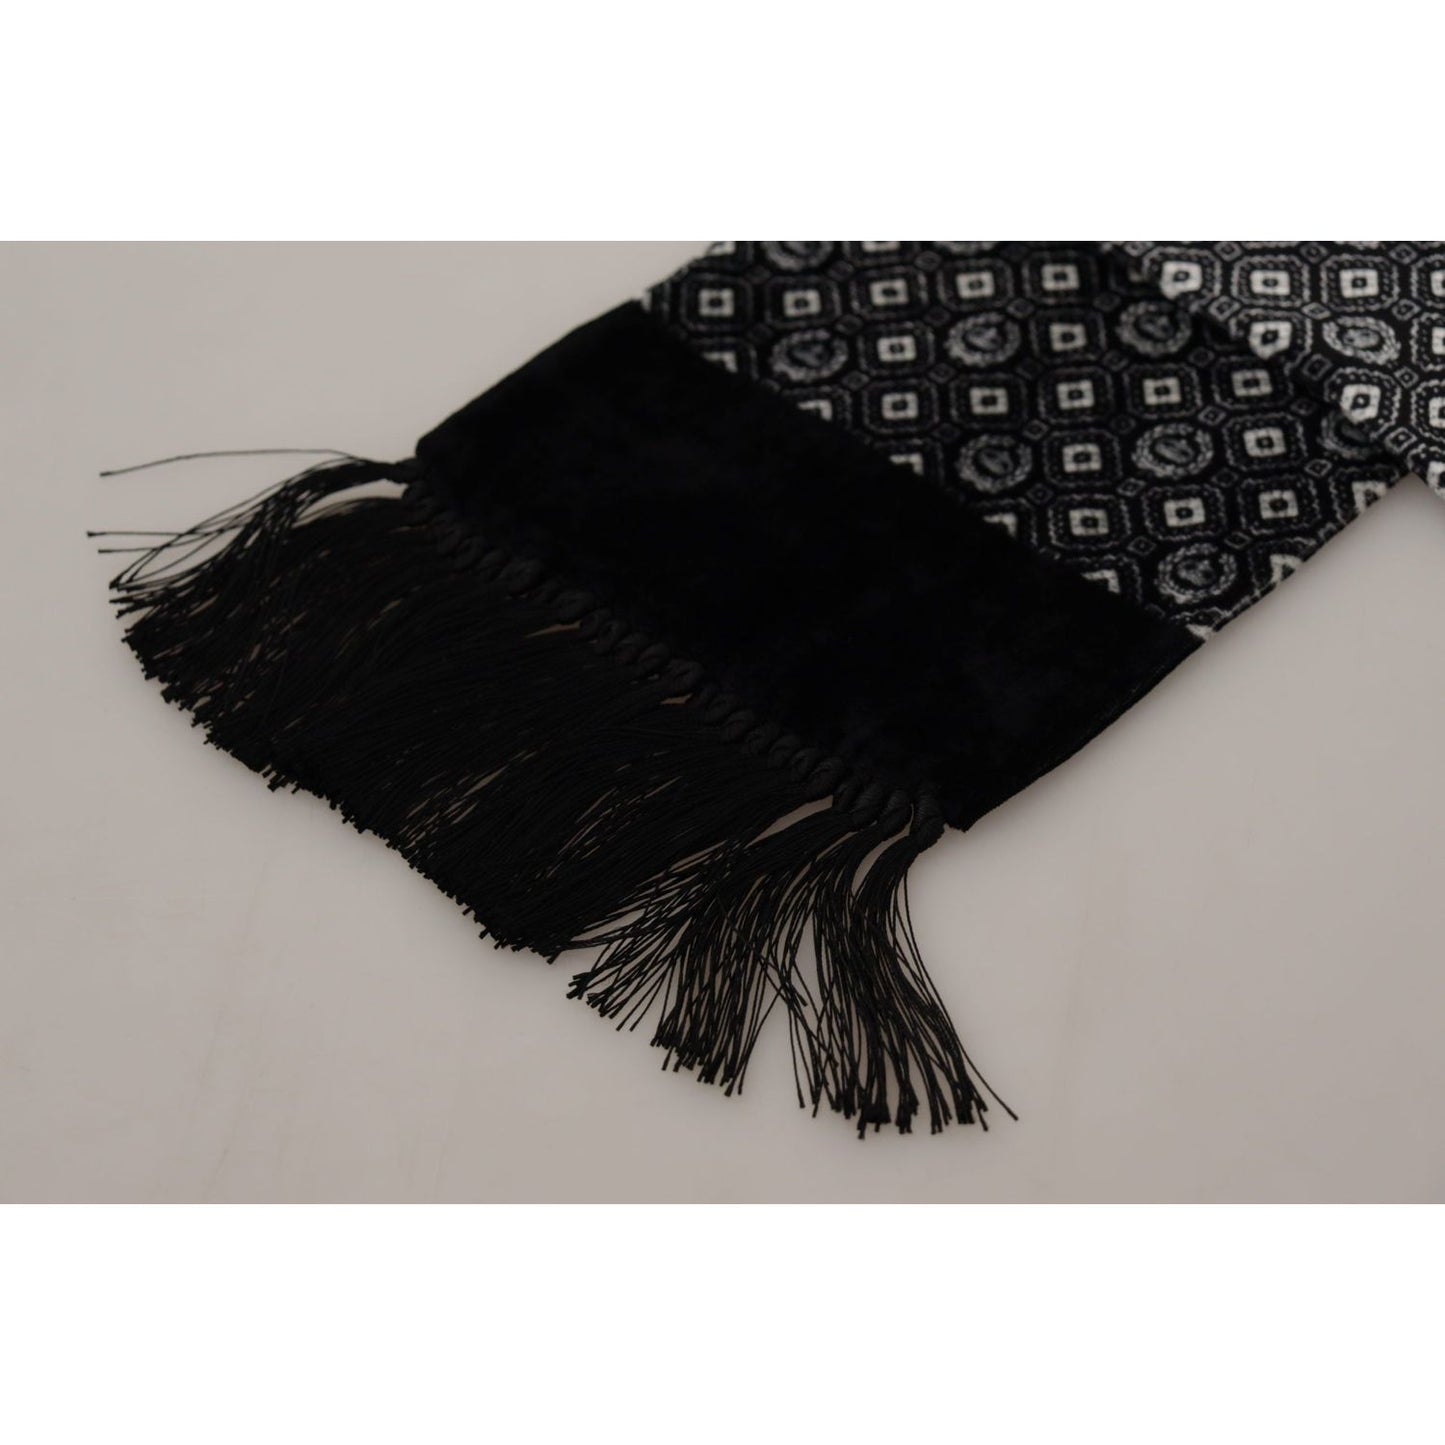 Dolce & Gabbana Elegant Black Geometric Silk Blend Scarf black-geometric-patterned-shawl-wrap-fringe-scarf